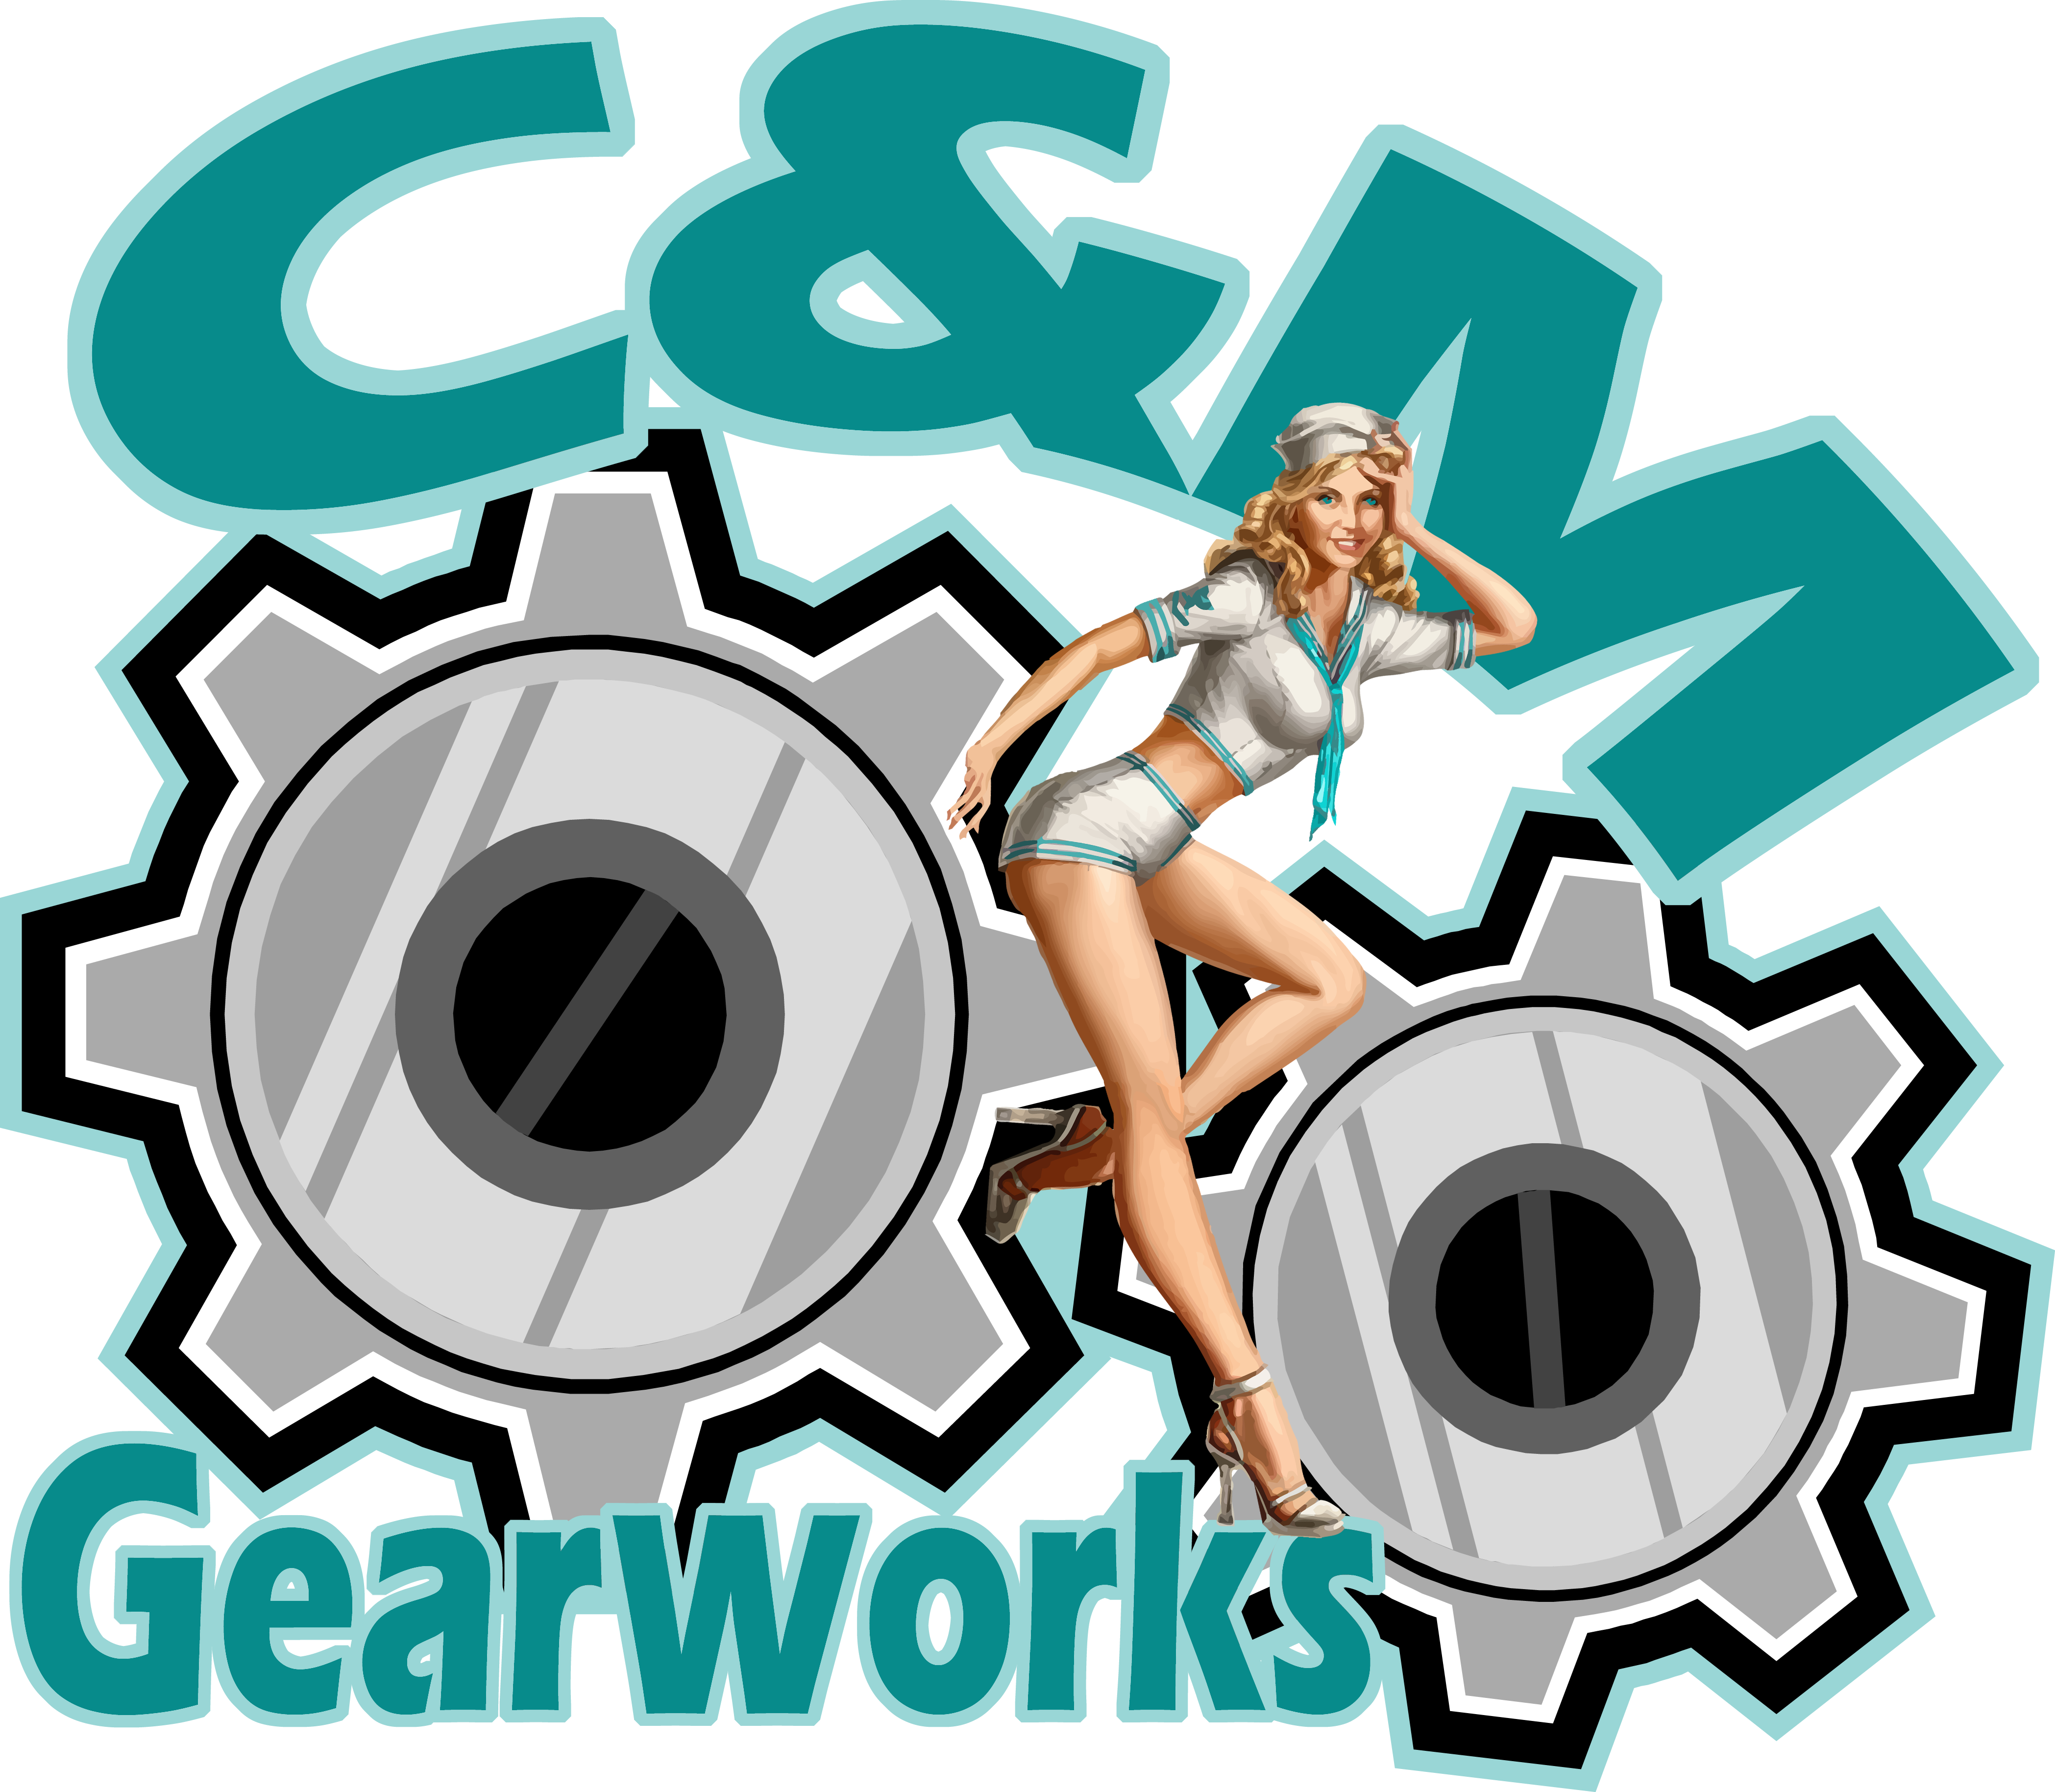 C&M Gearworks